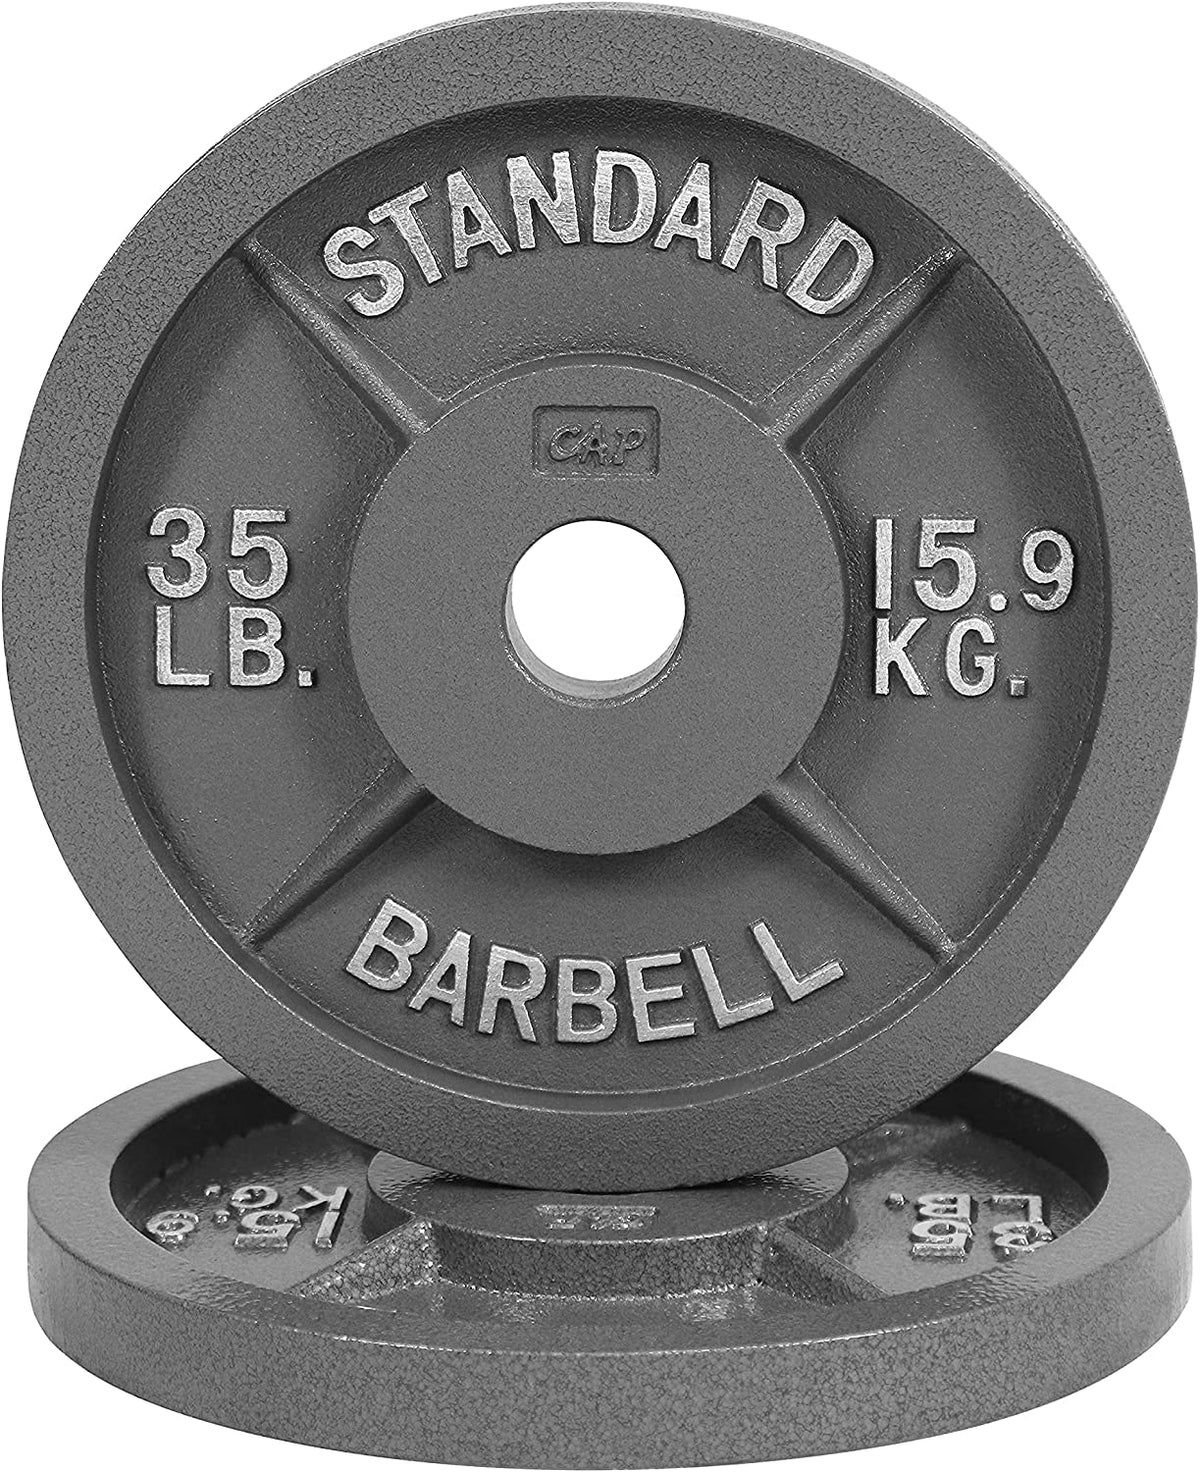 35lb Barbell Plates (2 Plates)